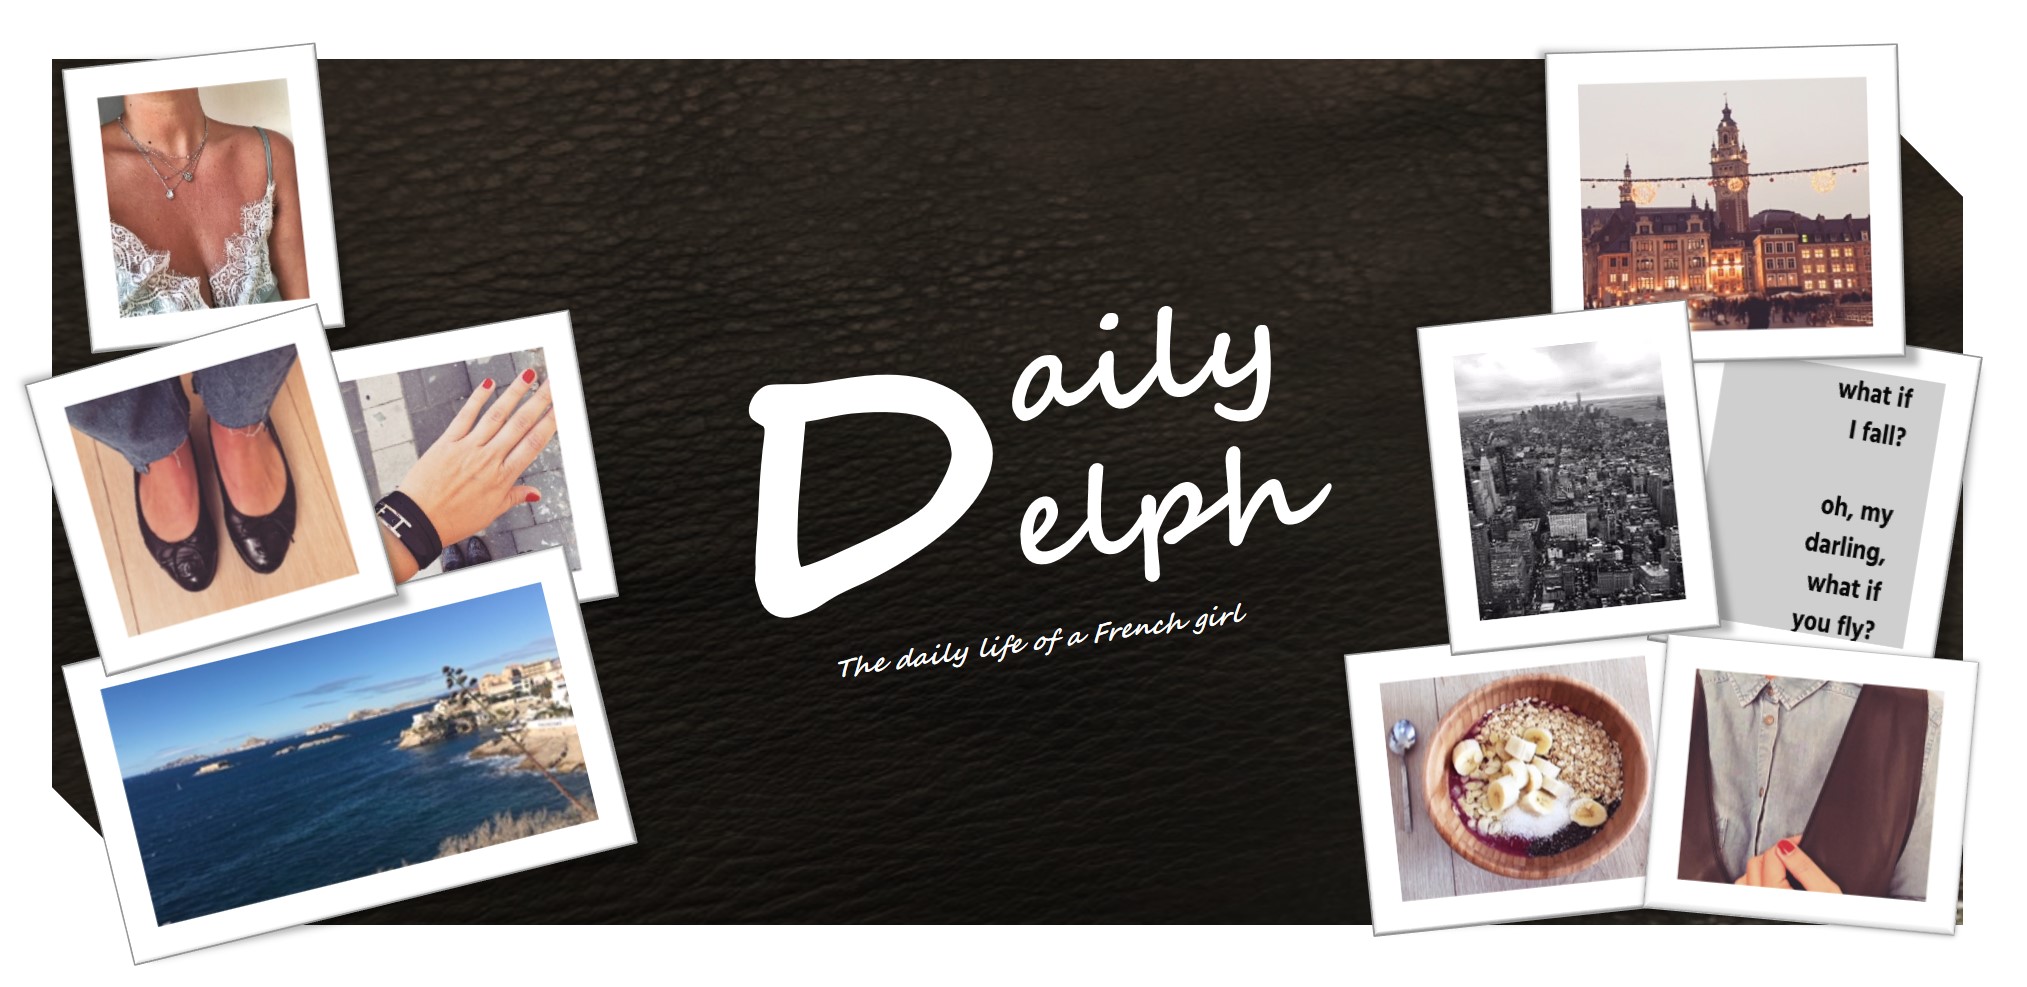 Daily Delph